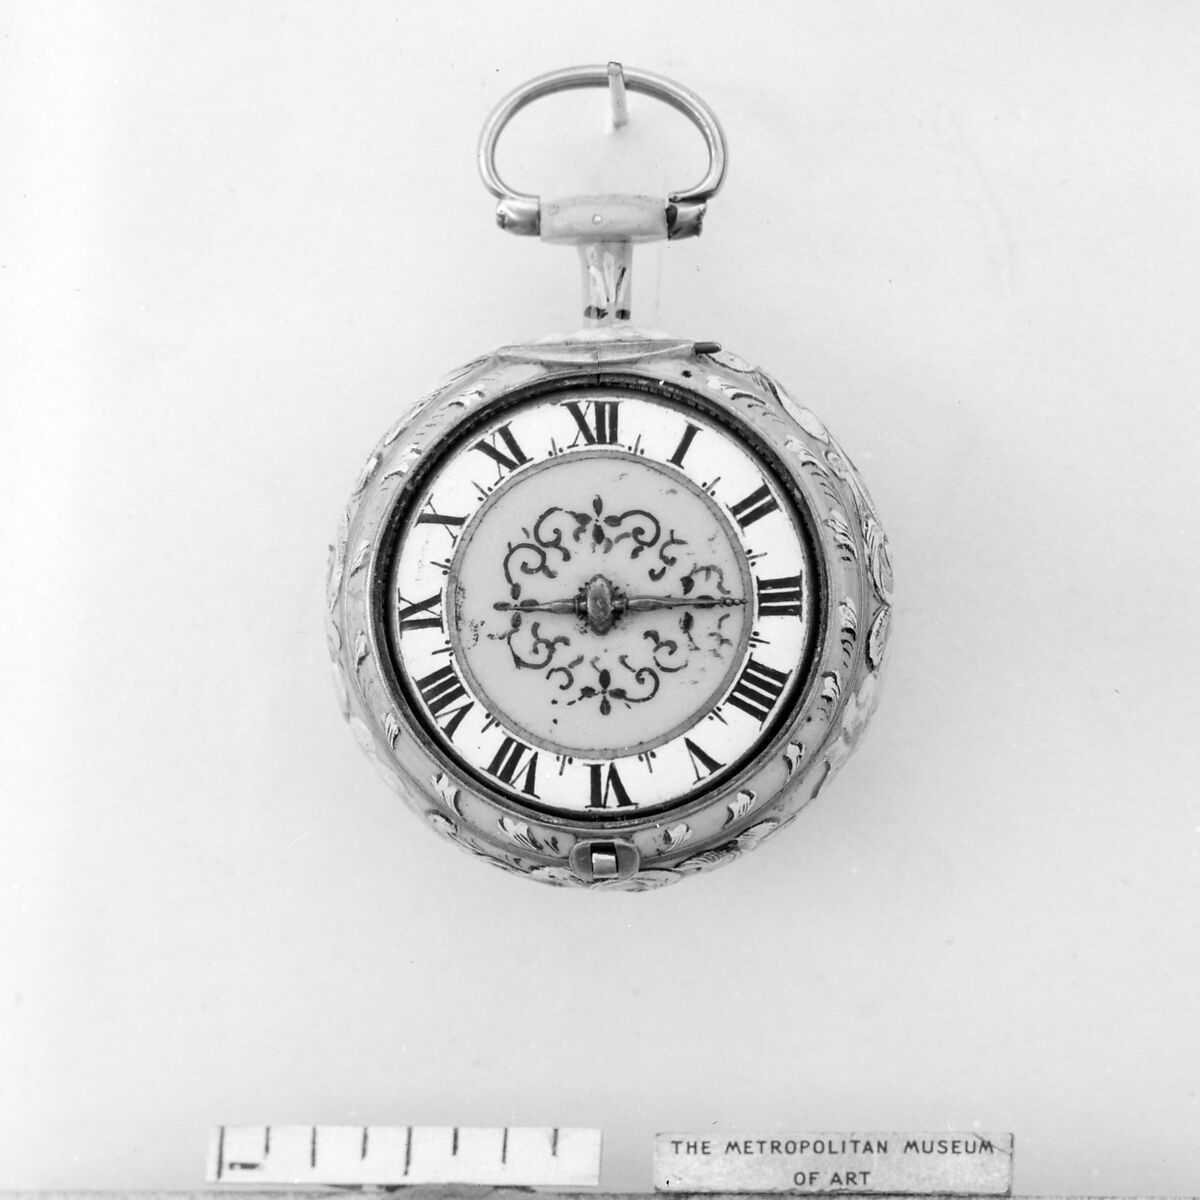 Watch, Watchmaker: Duhamel, Gold, enamel, French, Paris 